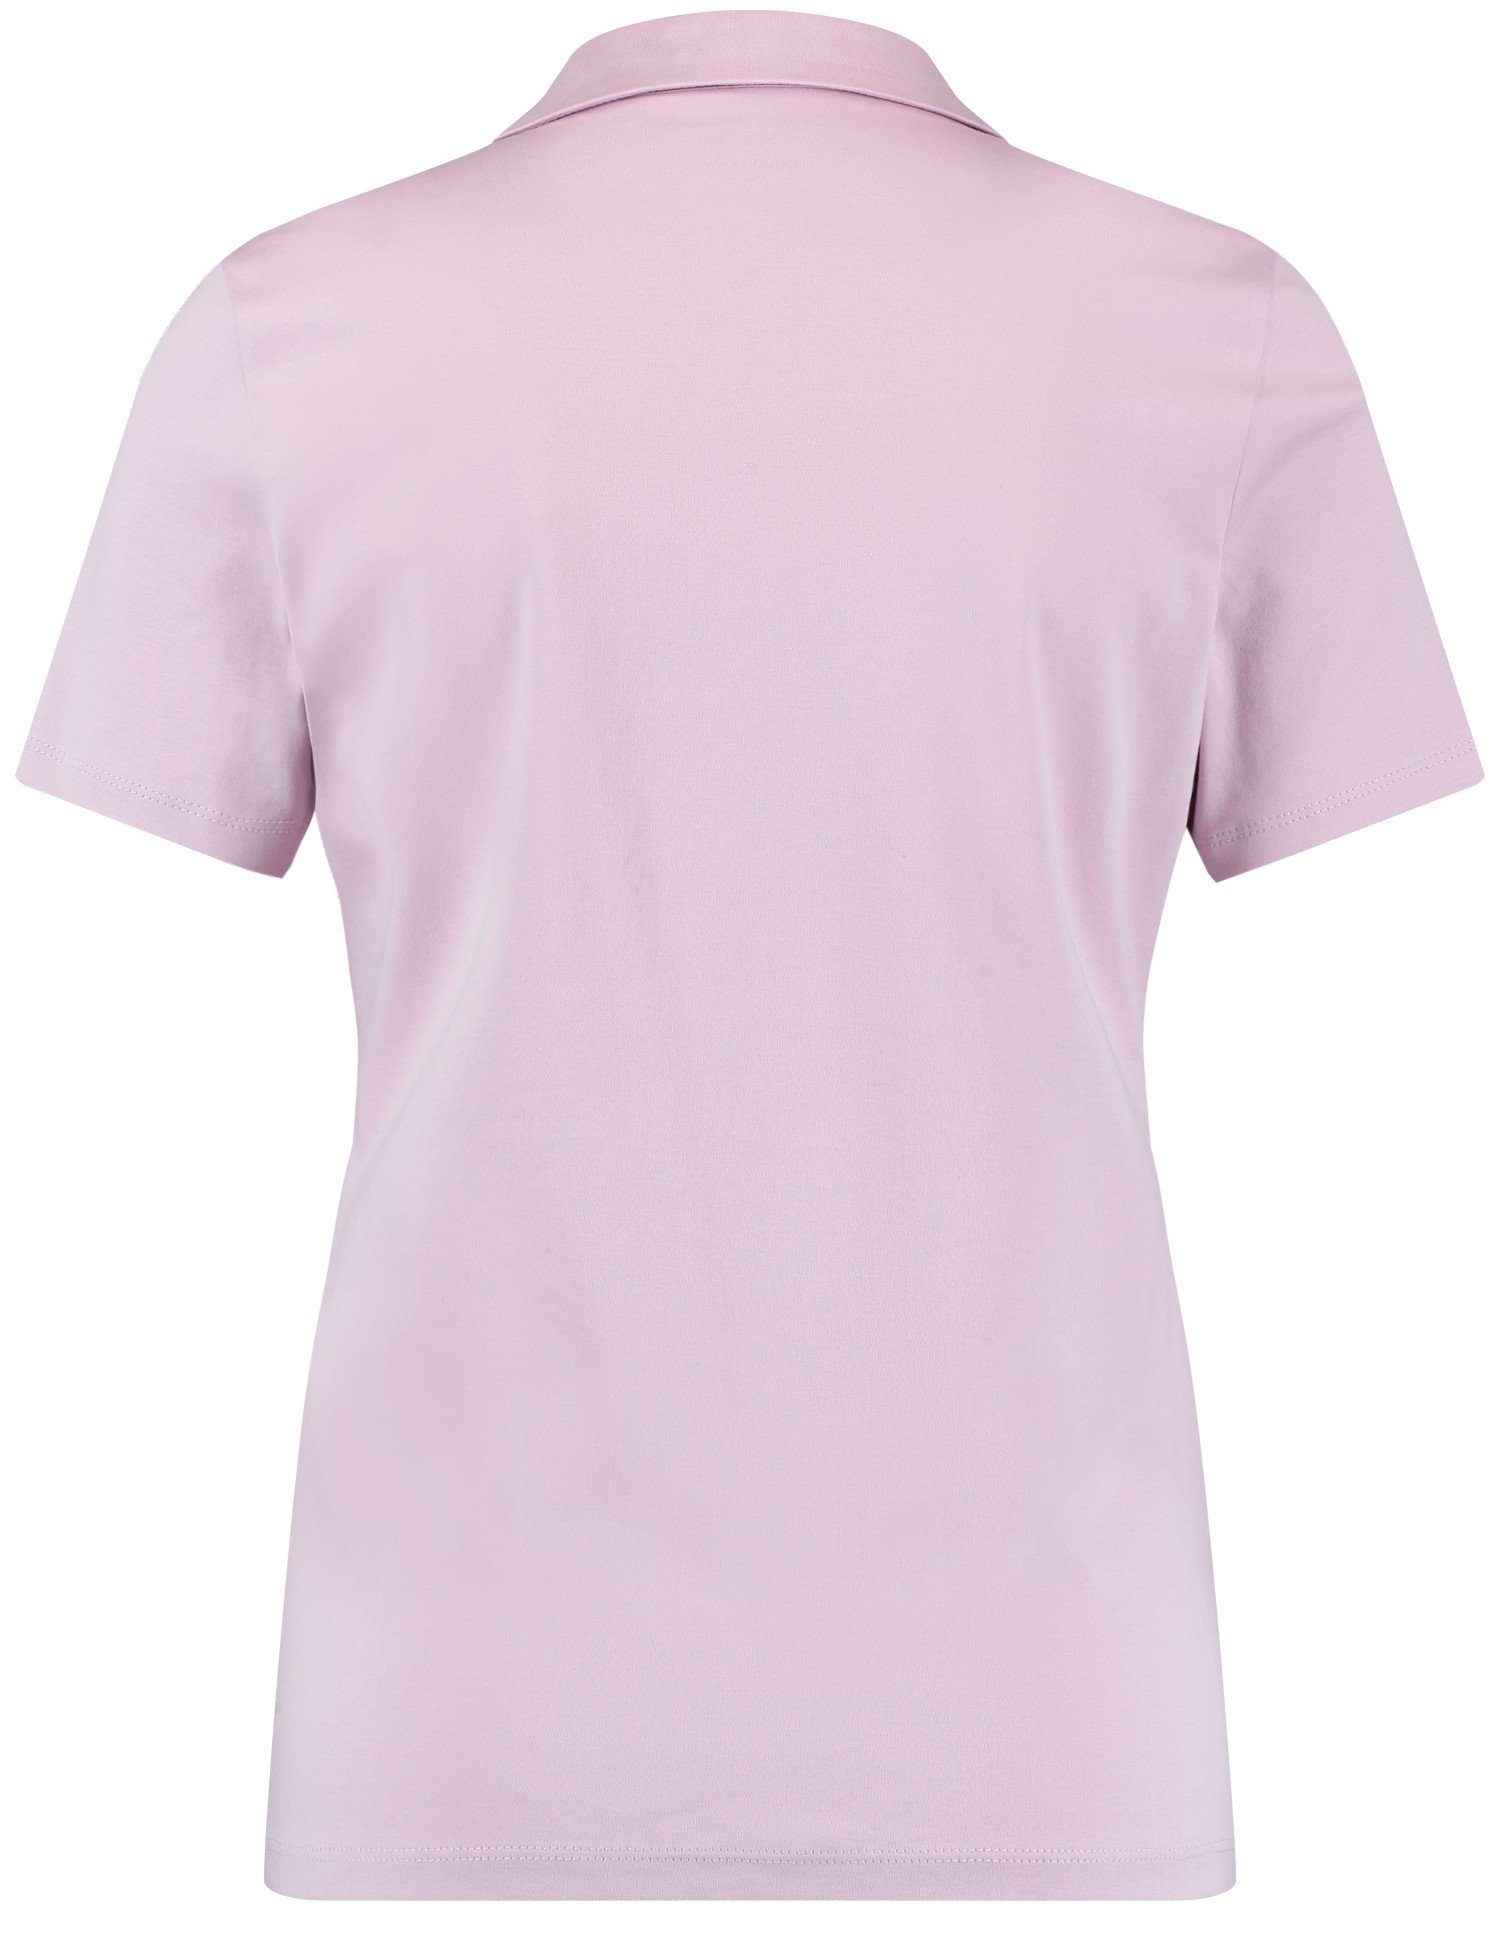 WEBER Poloshirt GERRY Powder Poloshirt Kurzarm Pink